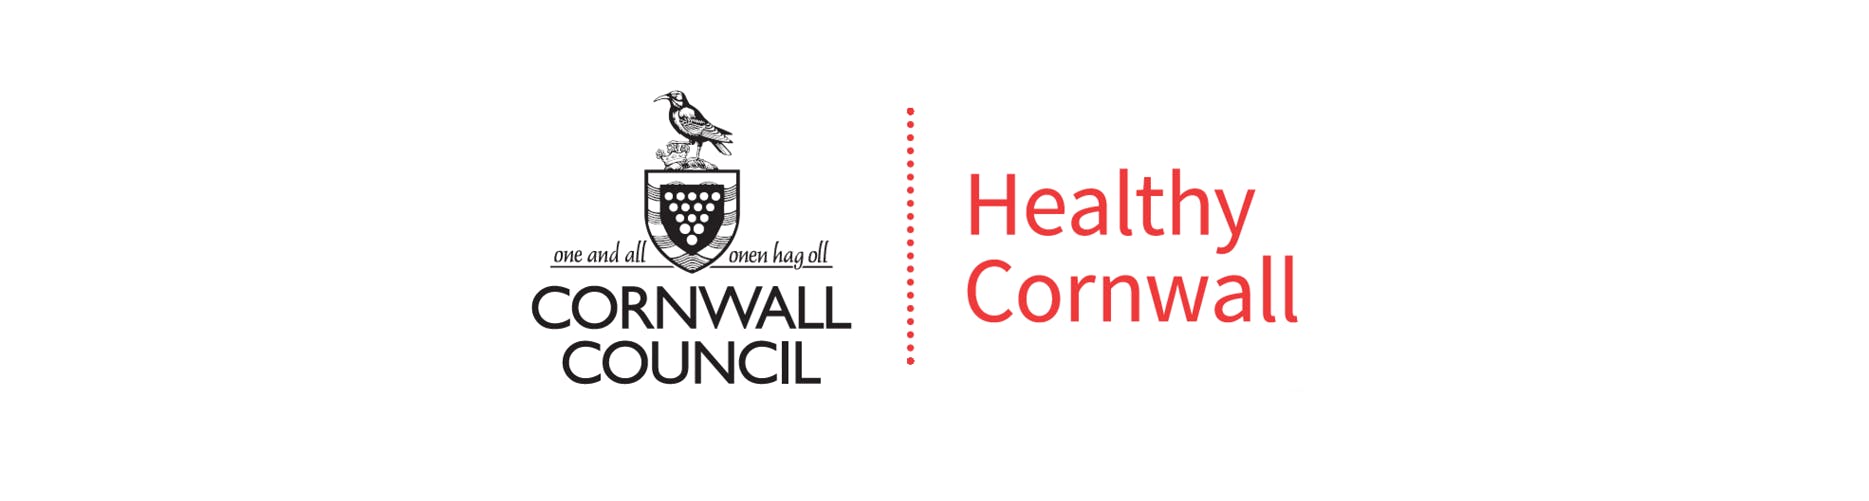 Healthy Cornwall banner